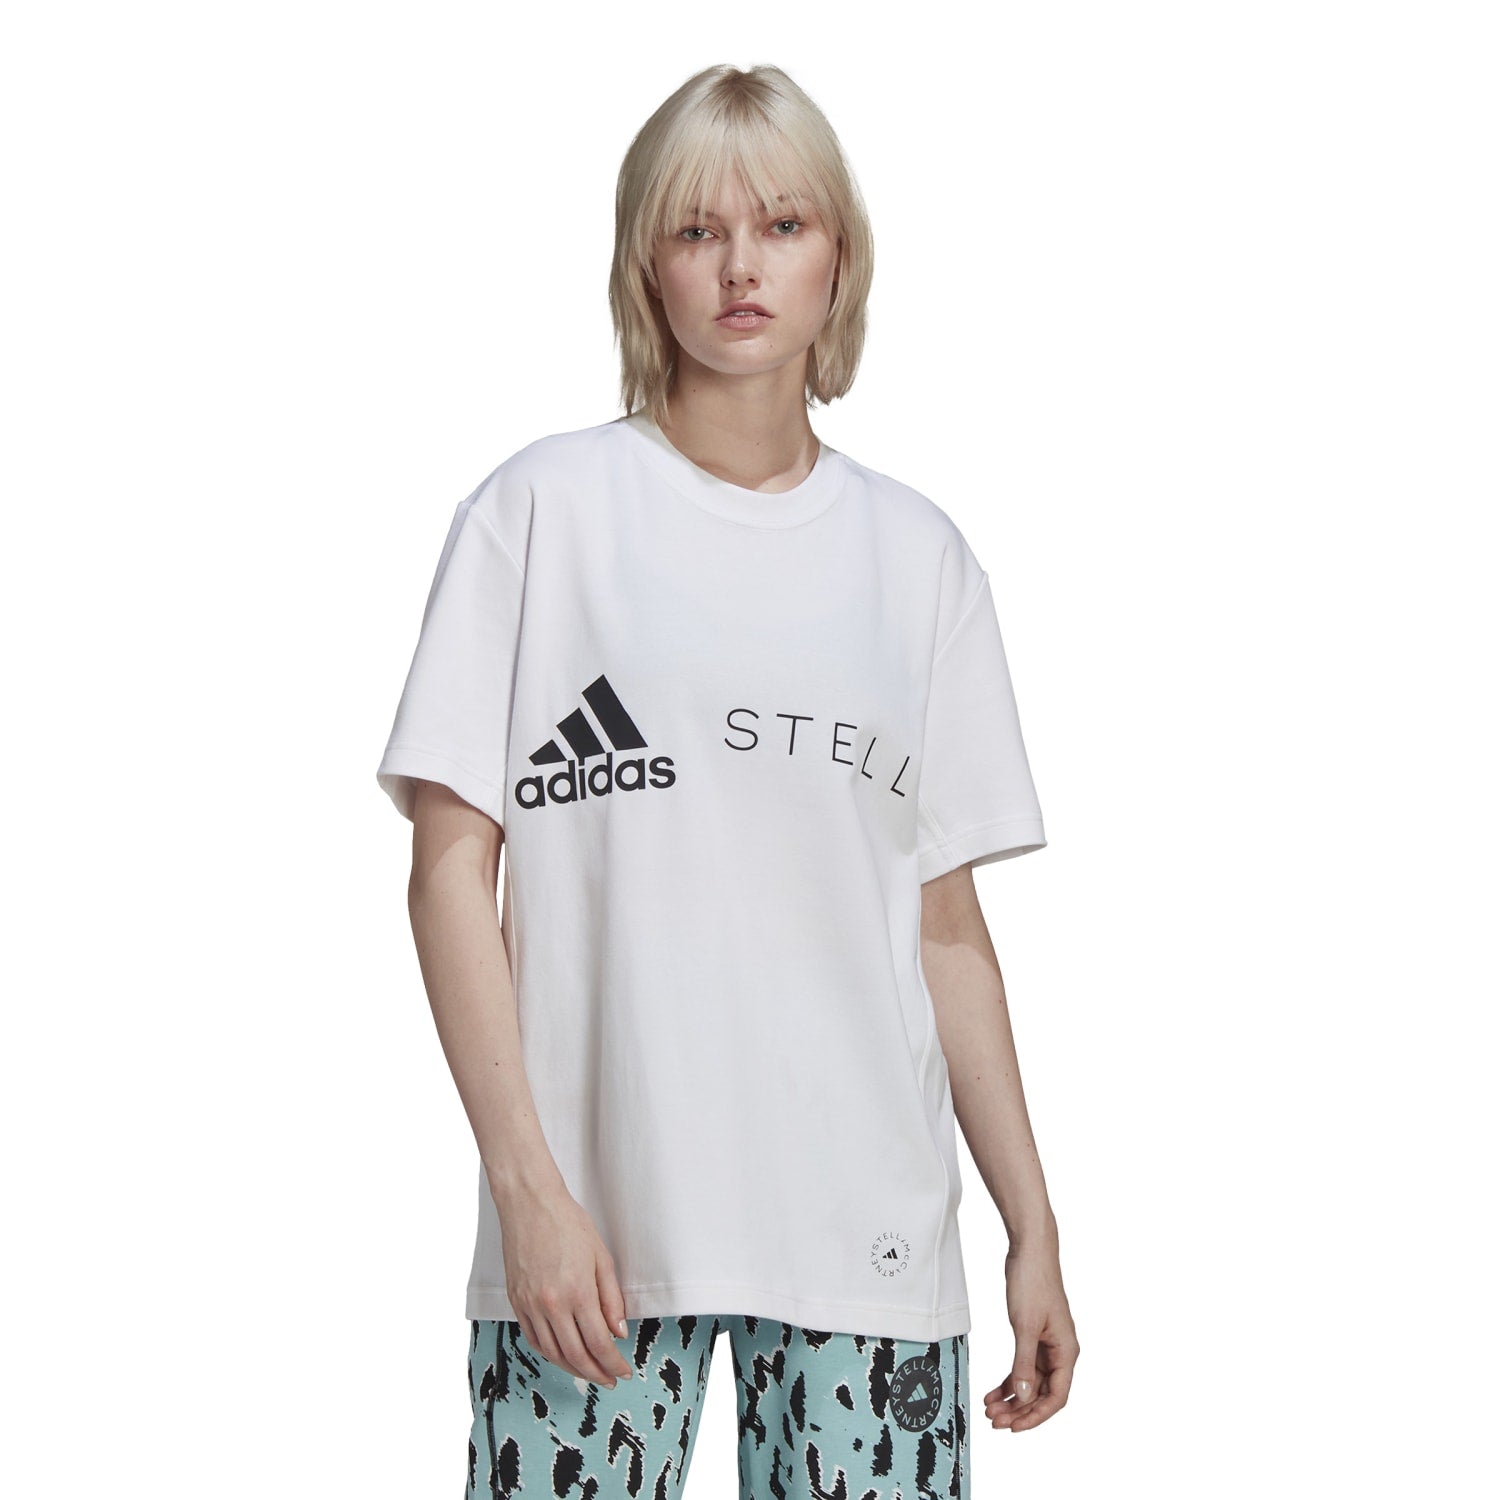 Adidas Women Stella McCartney Logo Tee White HB7401 - T-SHIRTS - Canada